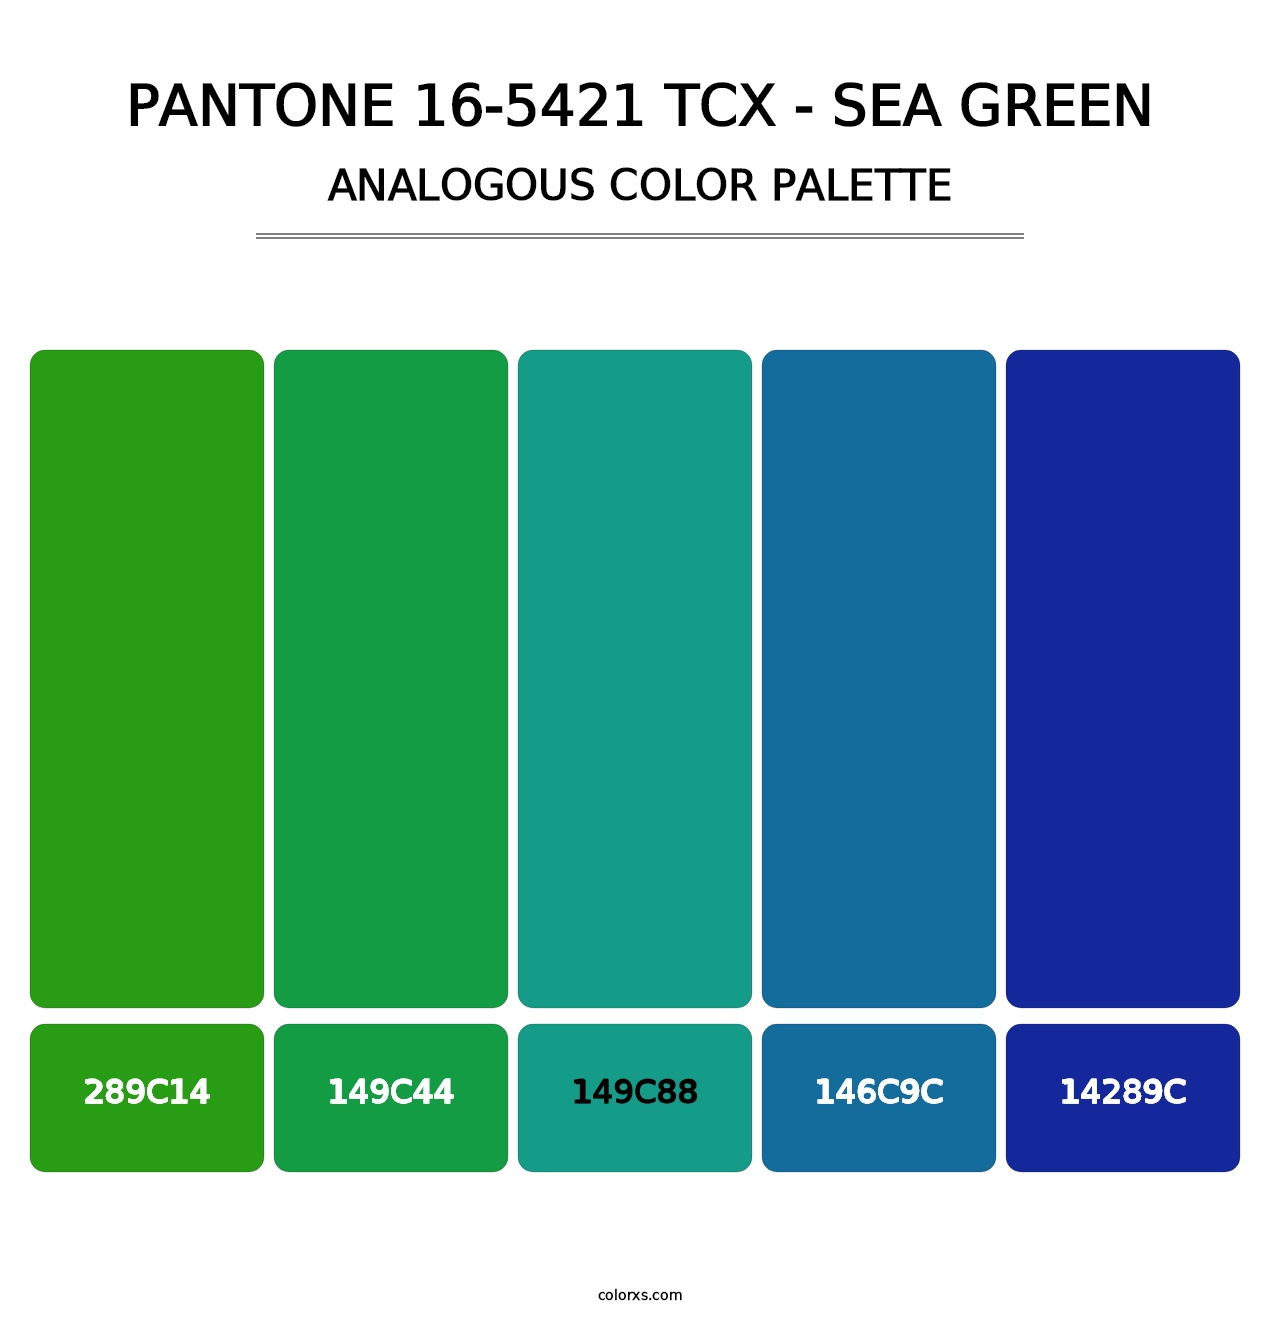 PANTONE 16-5421 TCX - Sea Green - Analogous Color Palette